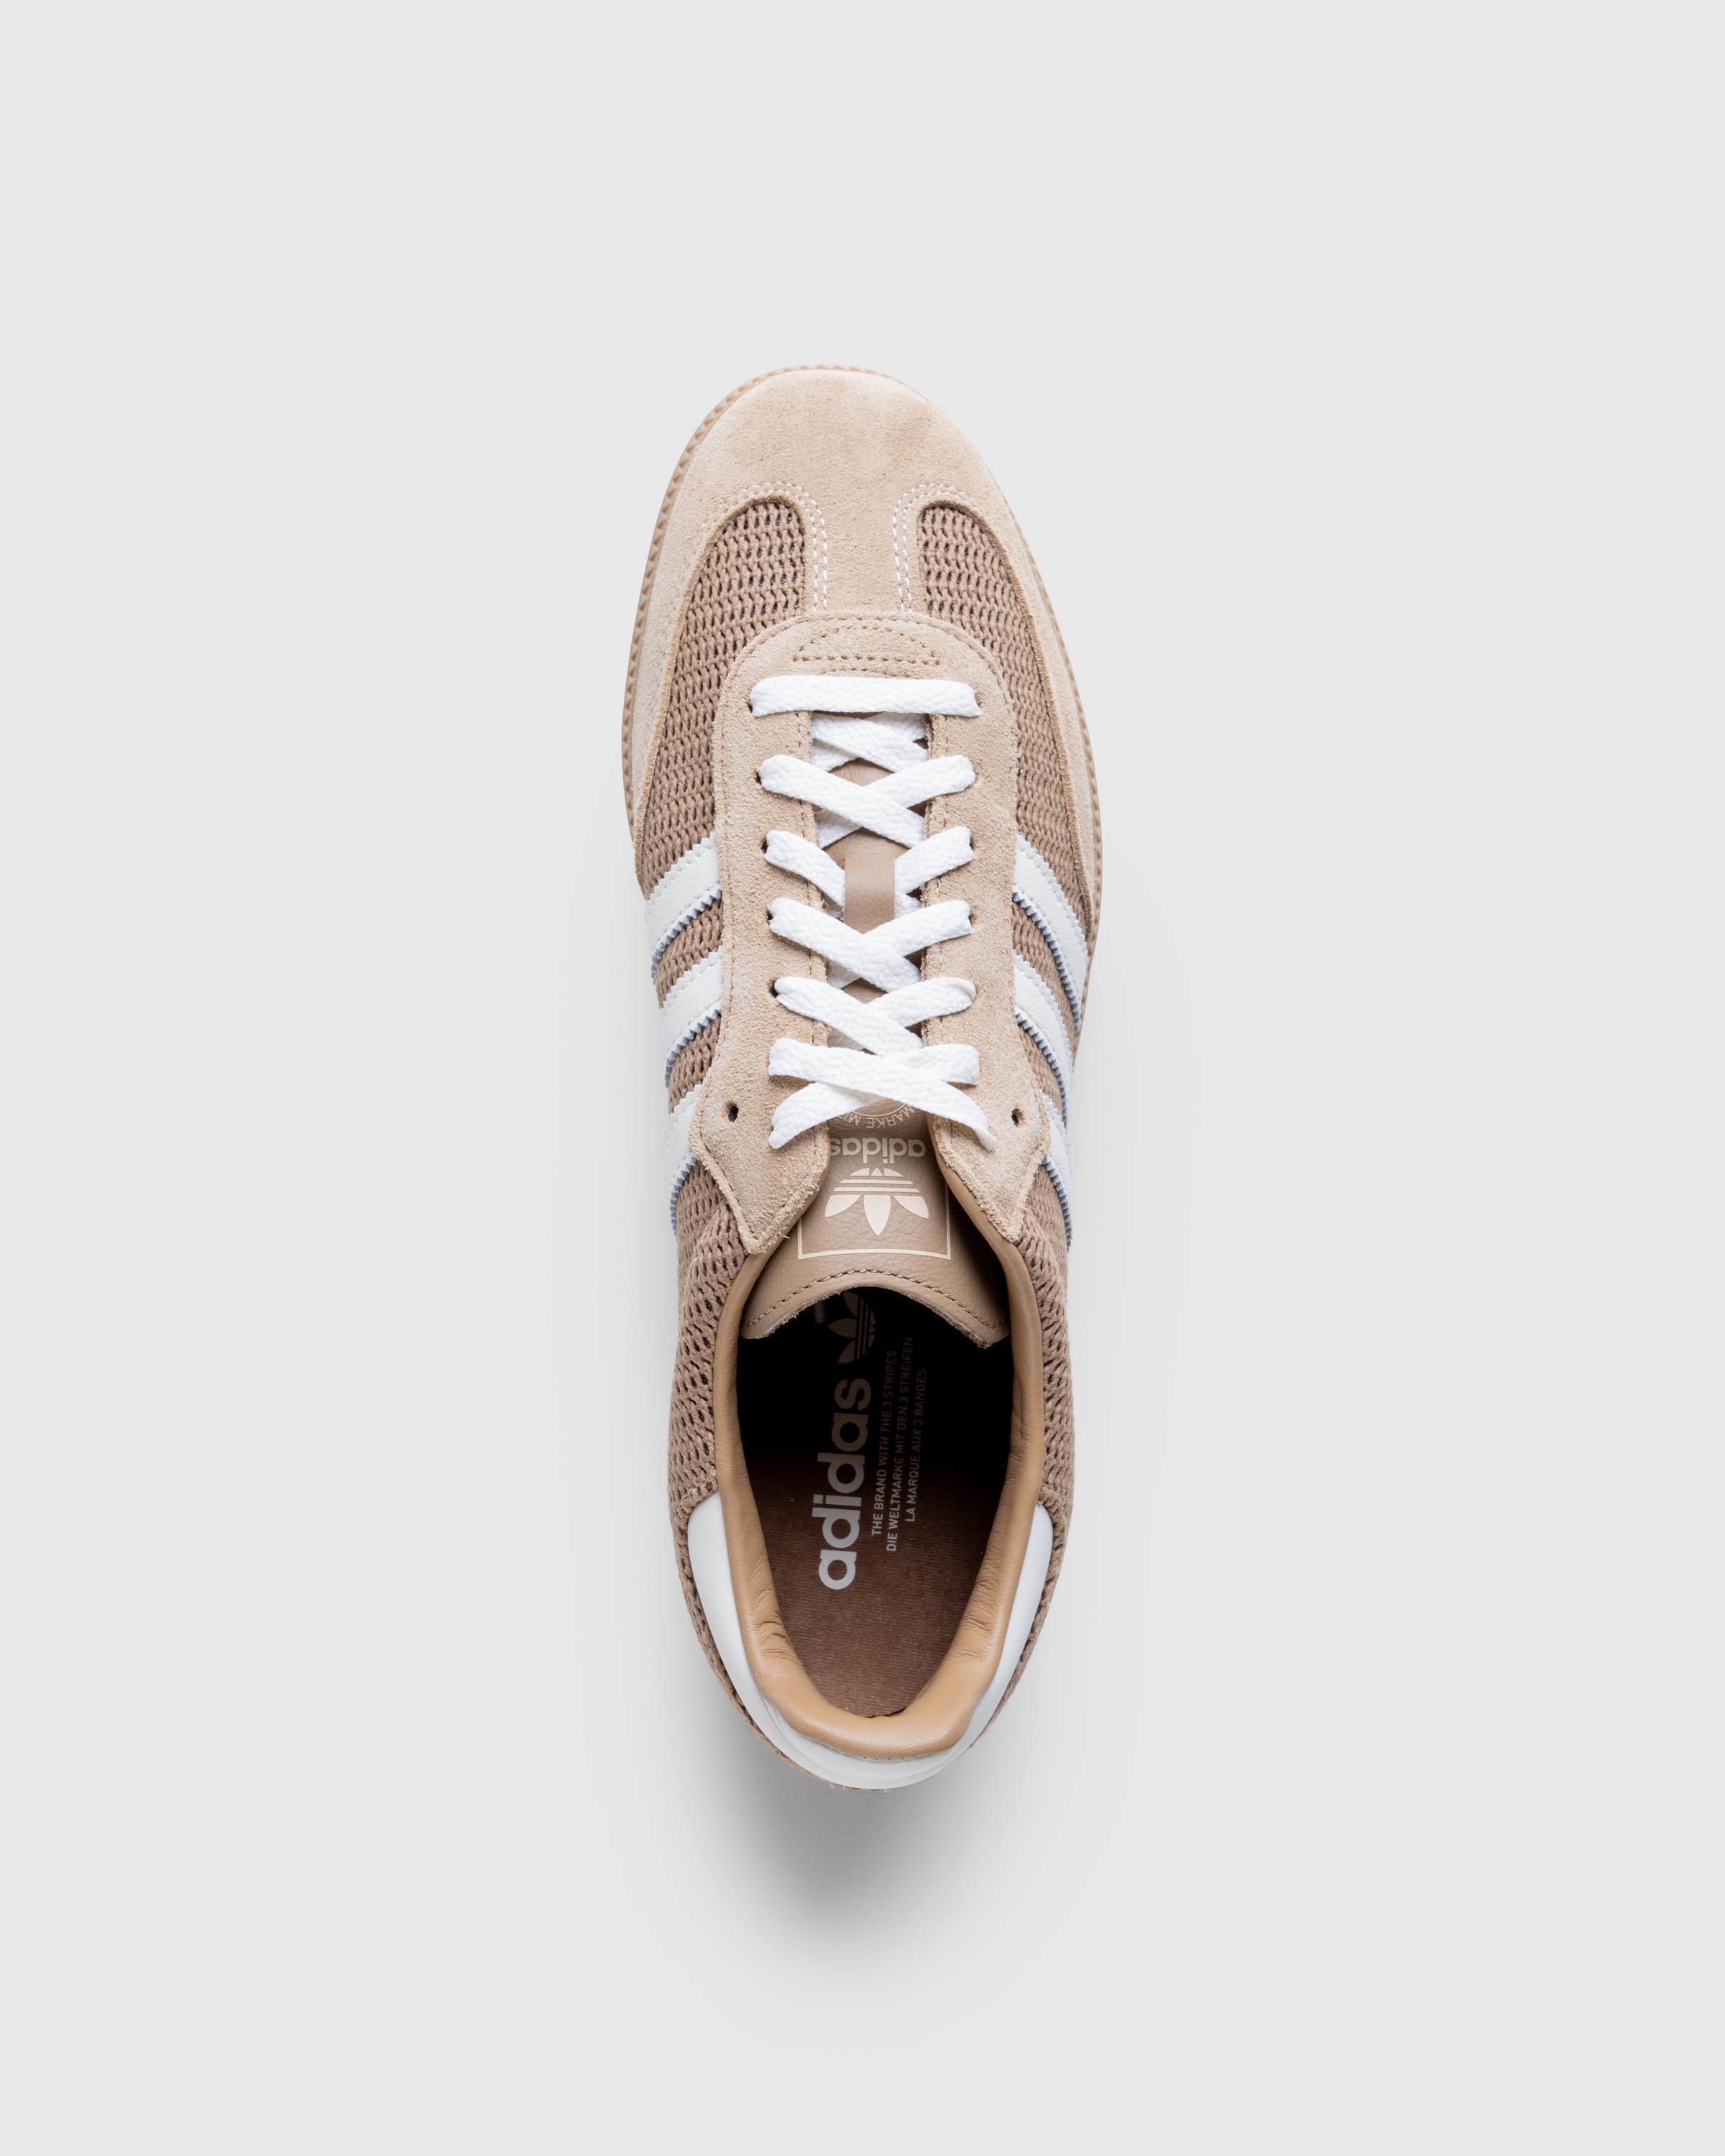 Adidas – Samba OG Cardboard - Sneakers - Brown - Image 5